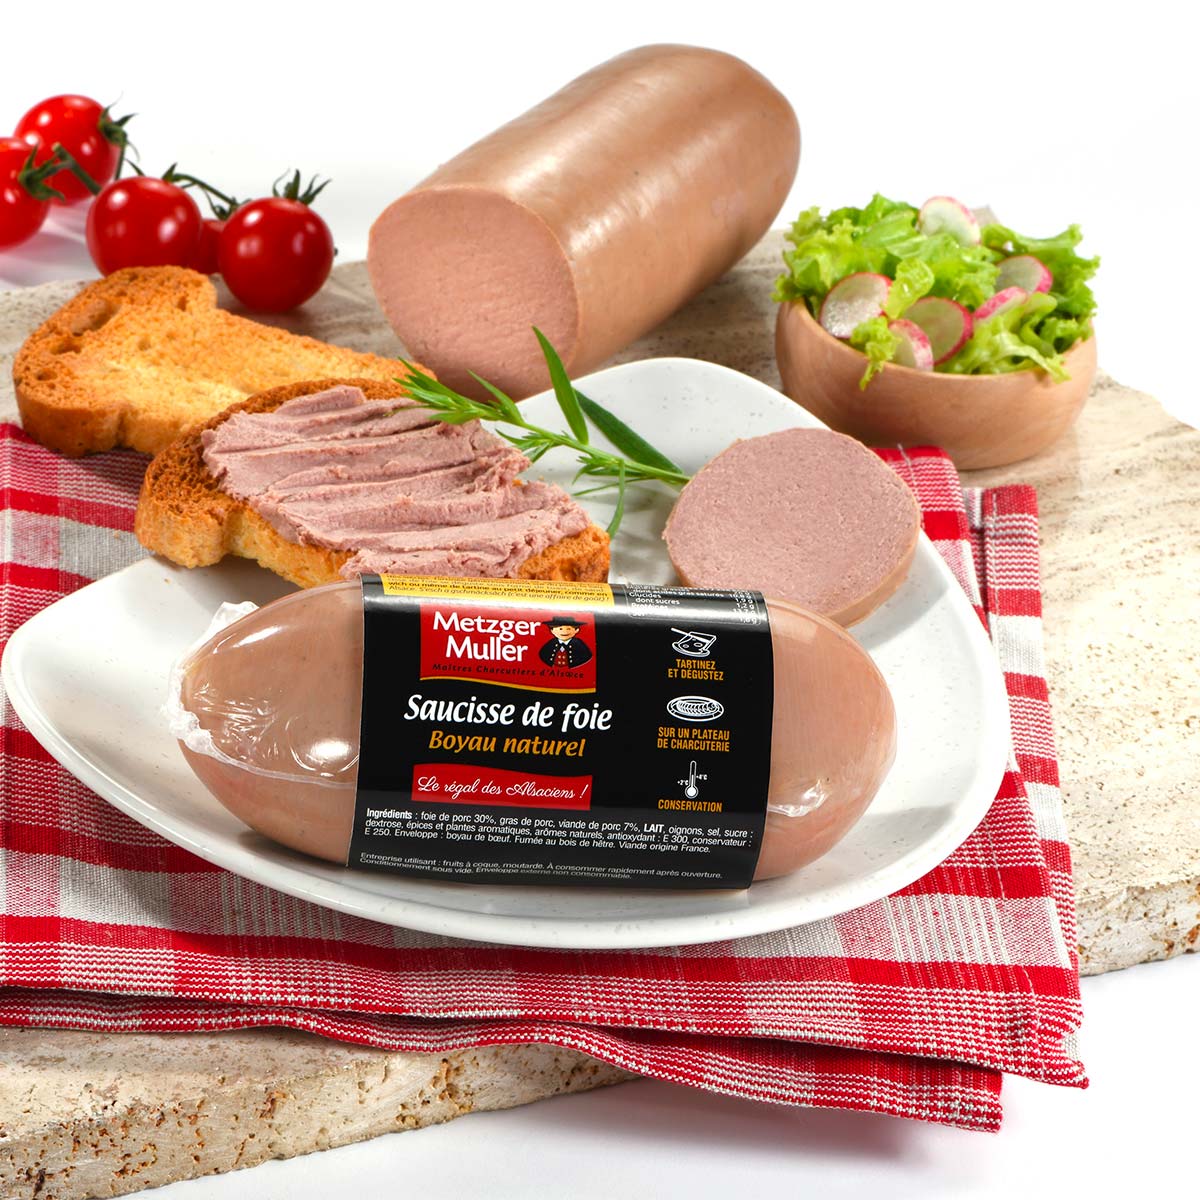 Saucisse de foie boyau naturel - Metzger Muller